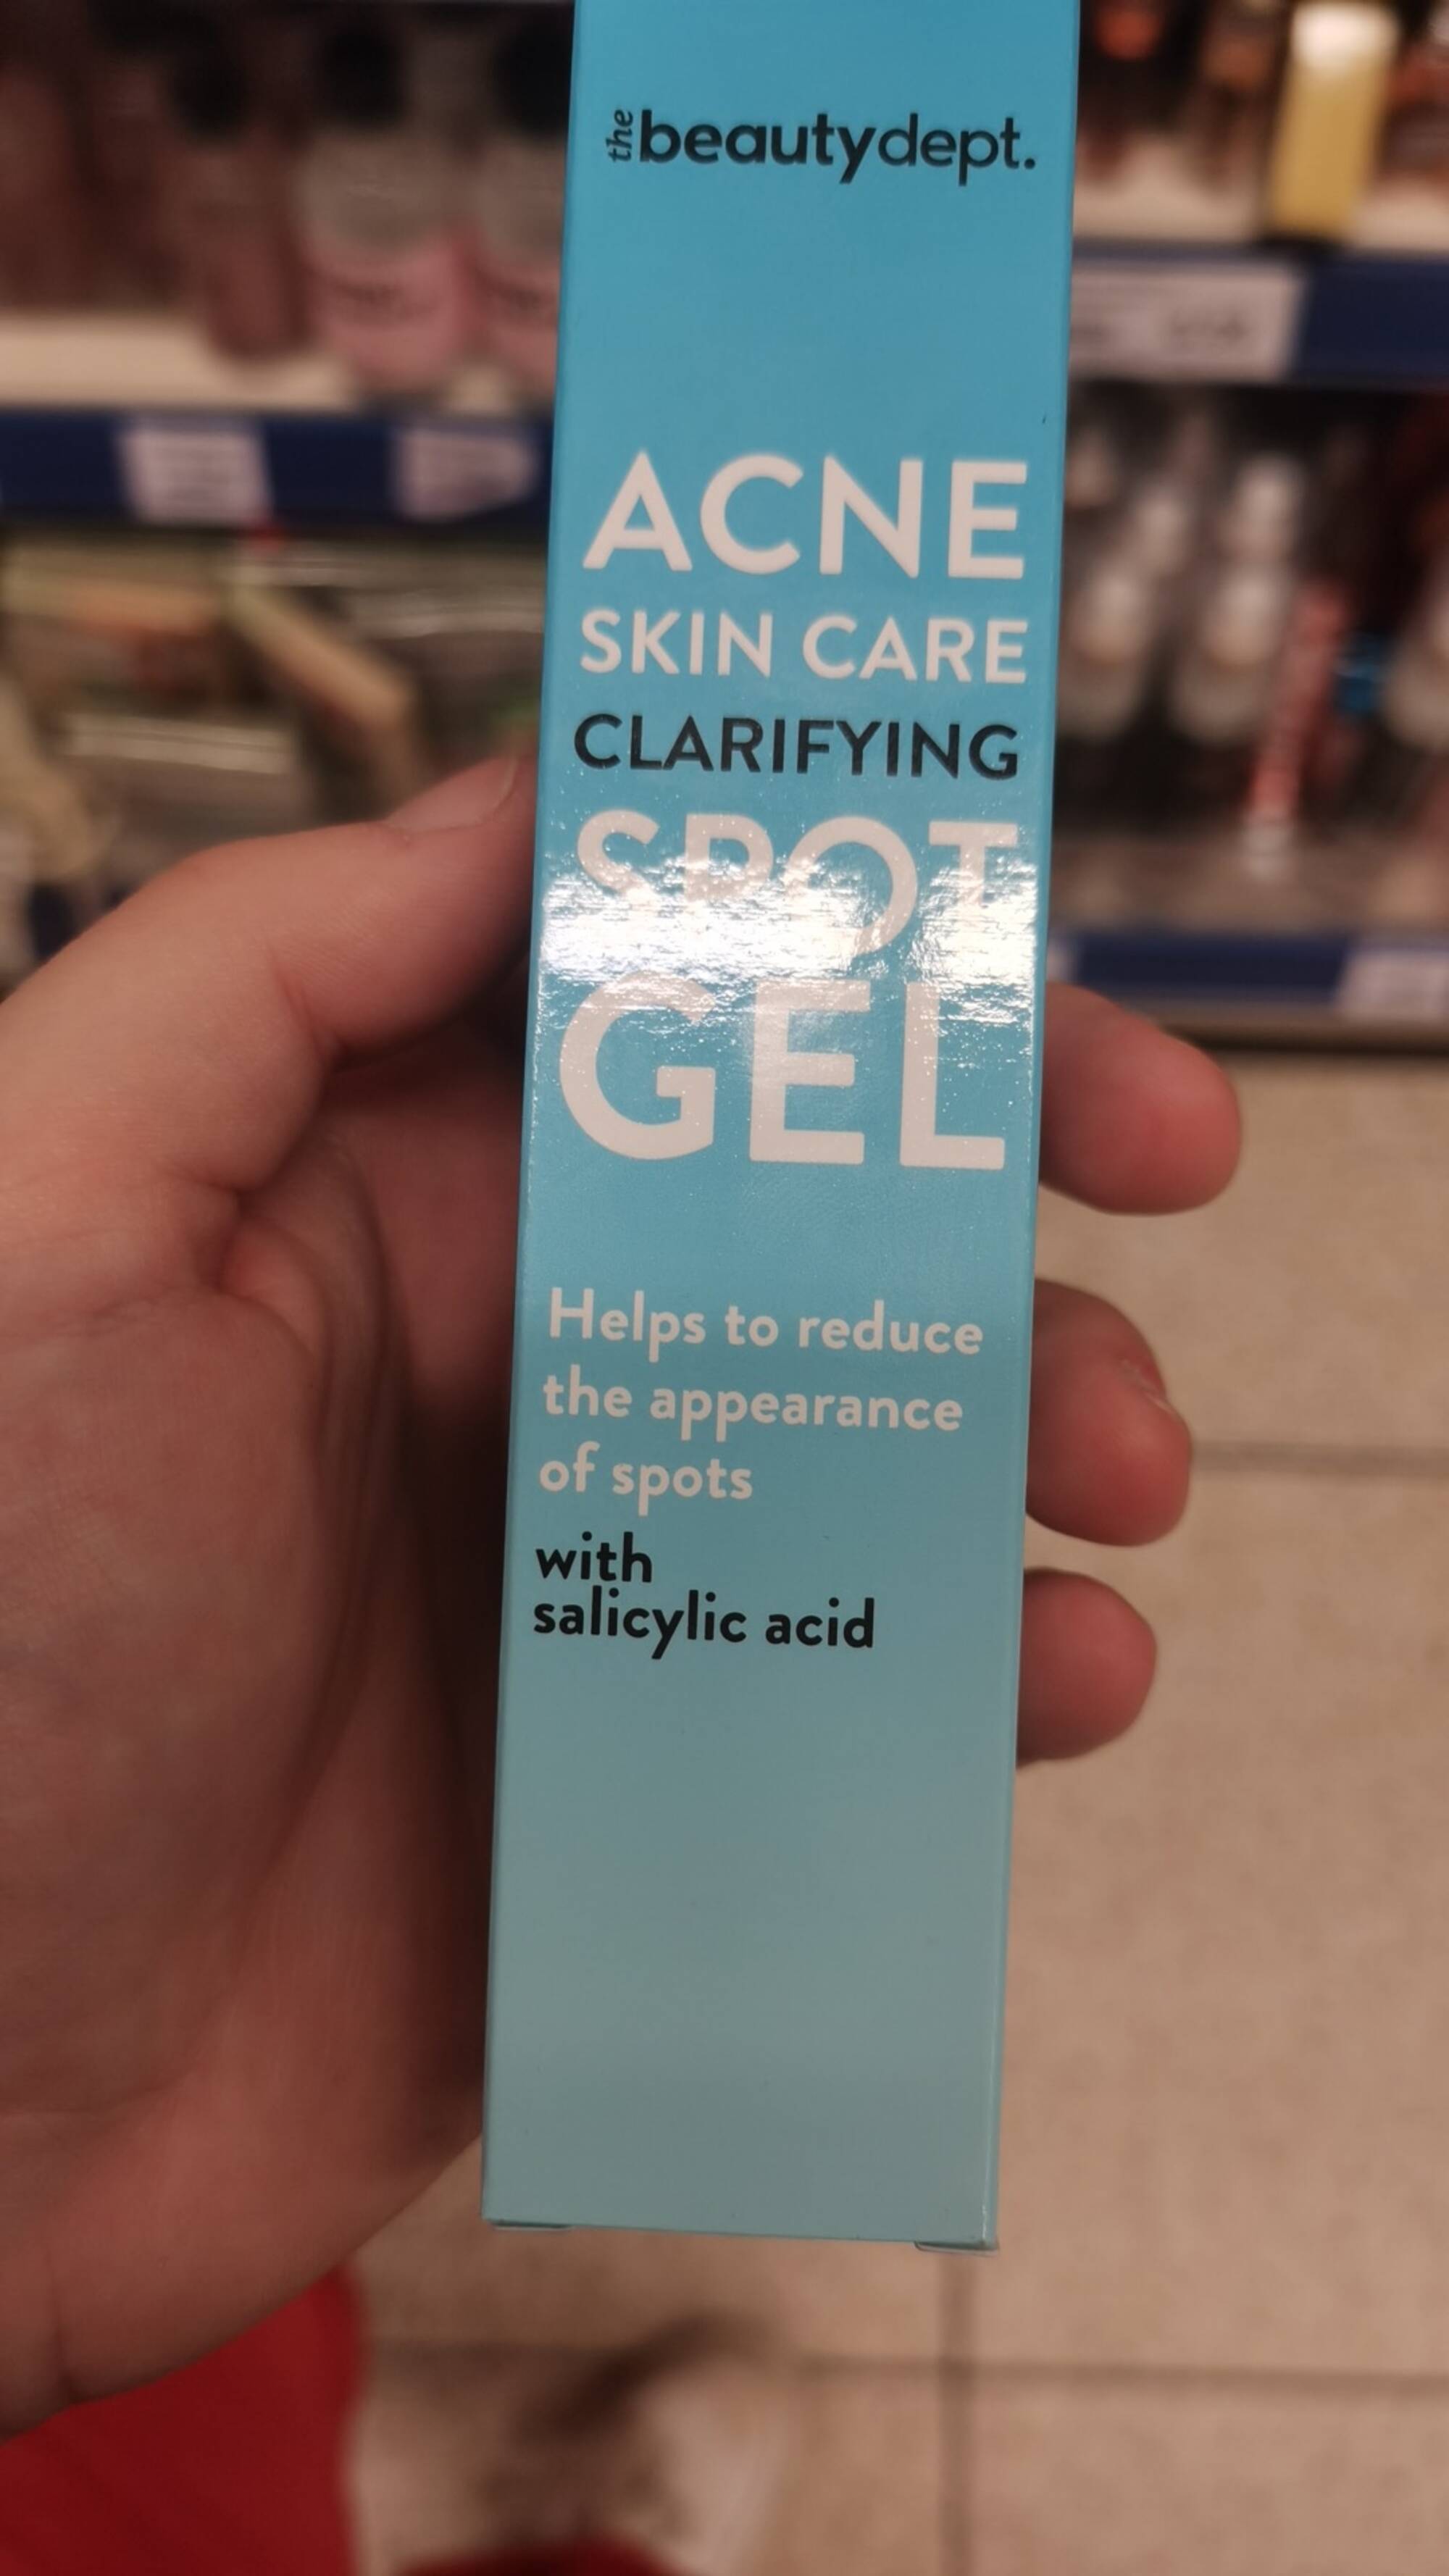 THE BEAUTY DEPT - Acne skin care clarifying spot gel